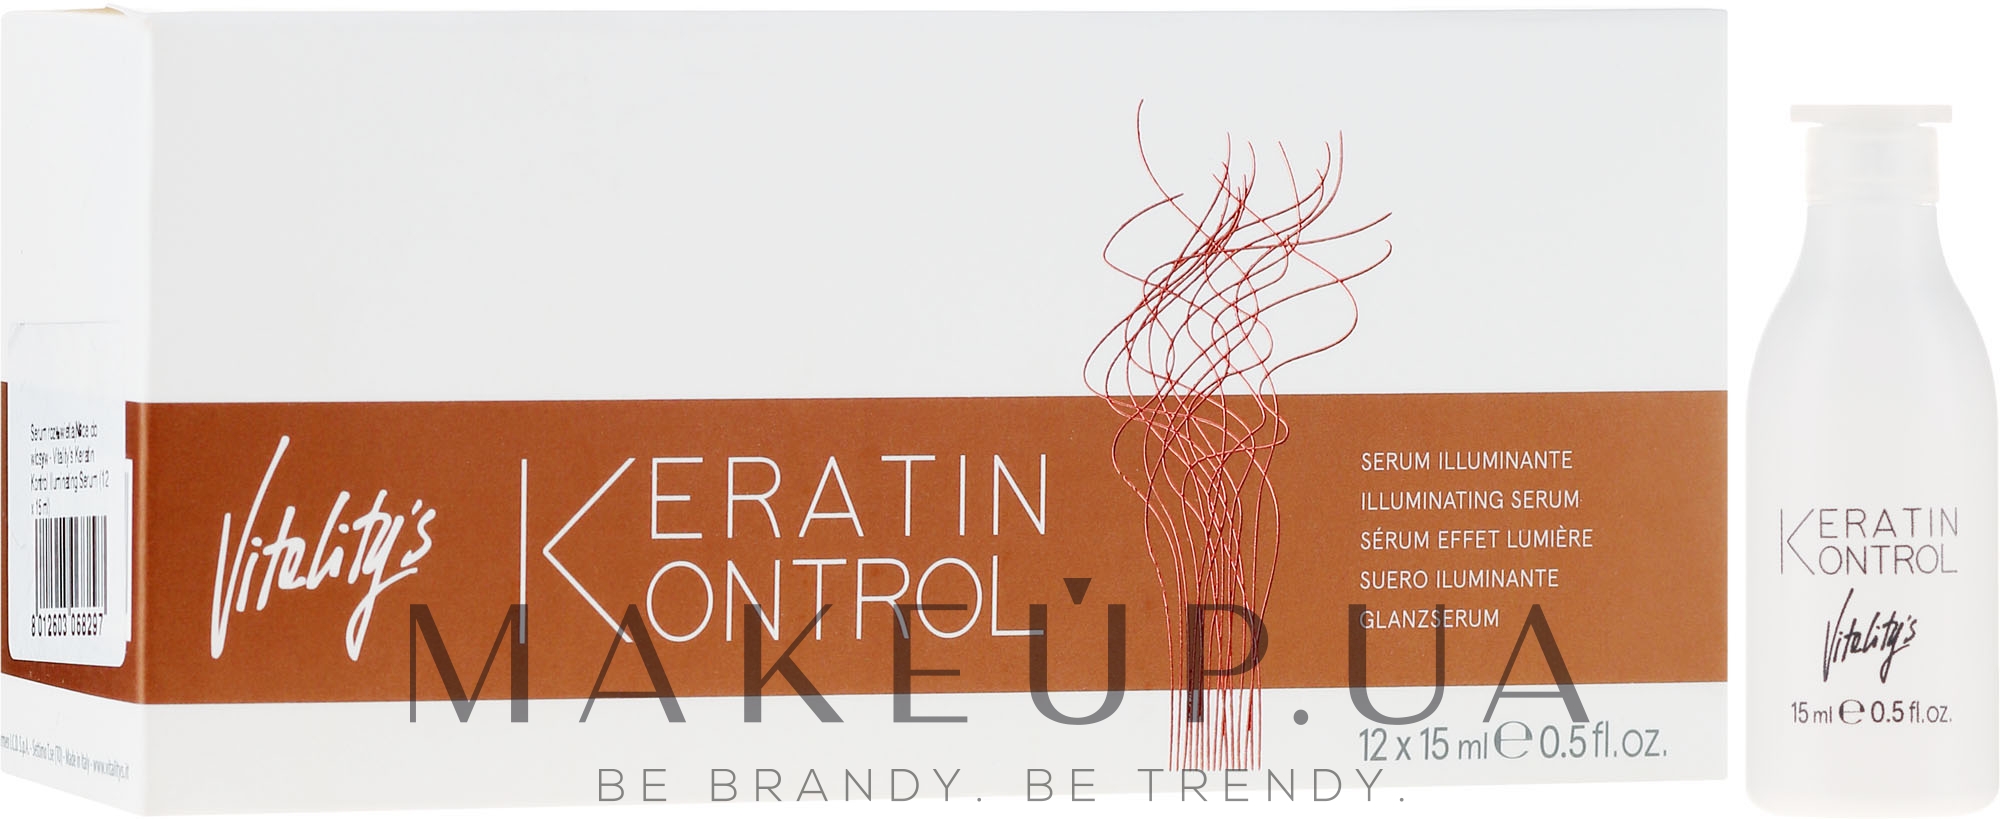 Сыворотка для блеска волос - Vitality's Keratin Kontrol Illuminating Serum — фото 12x15ml